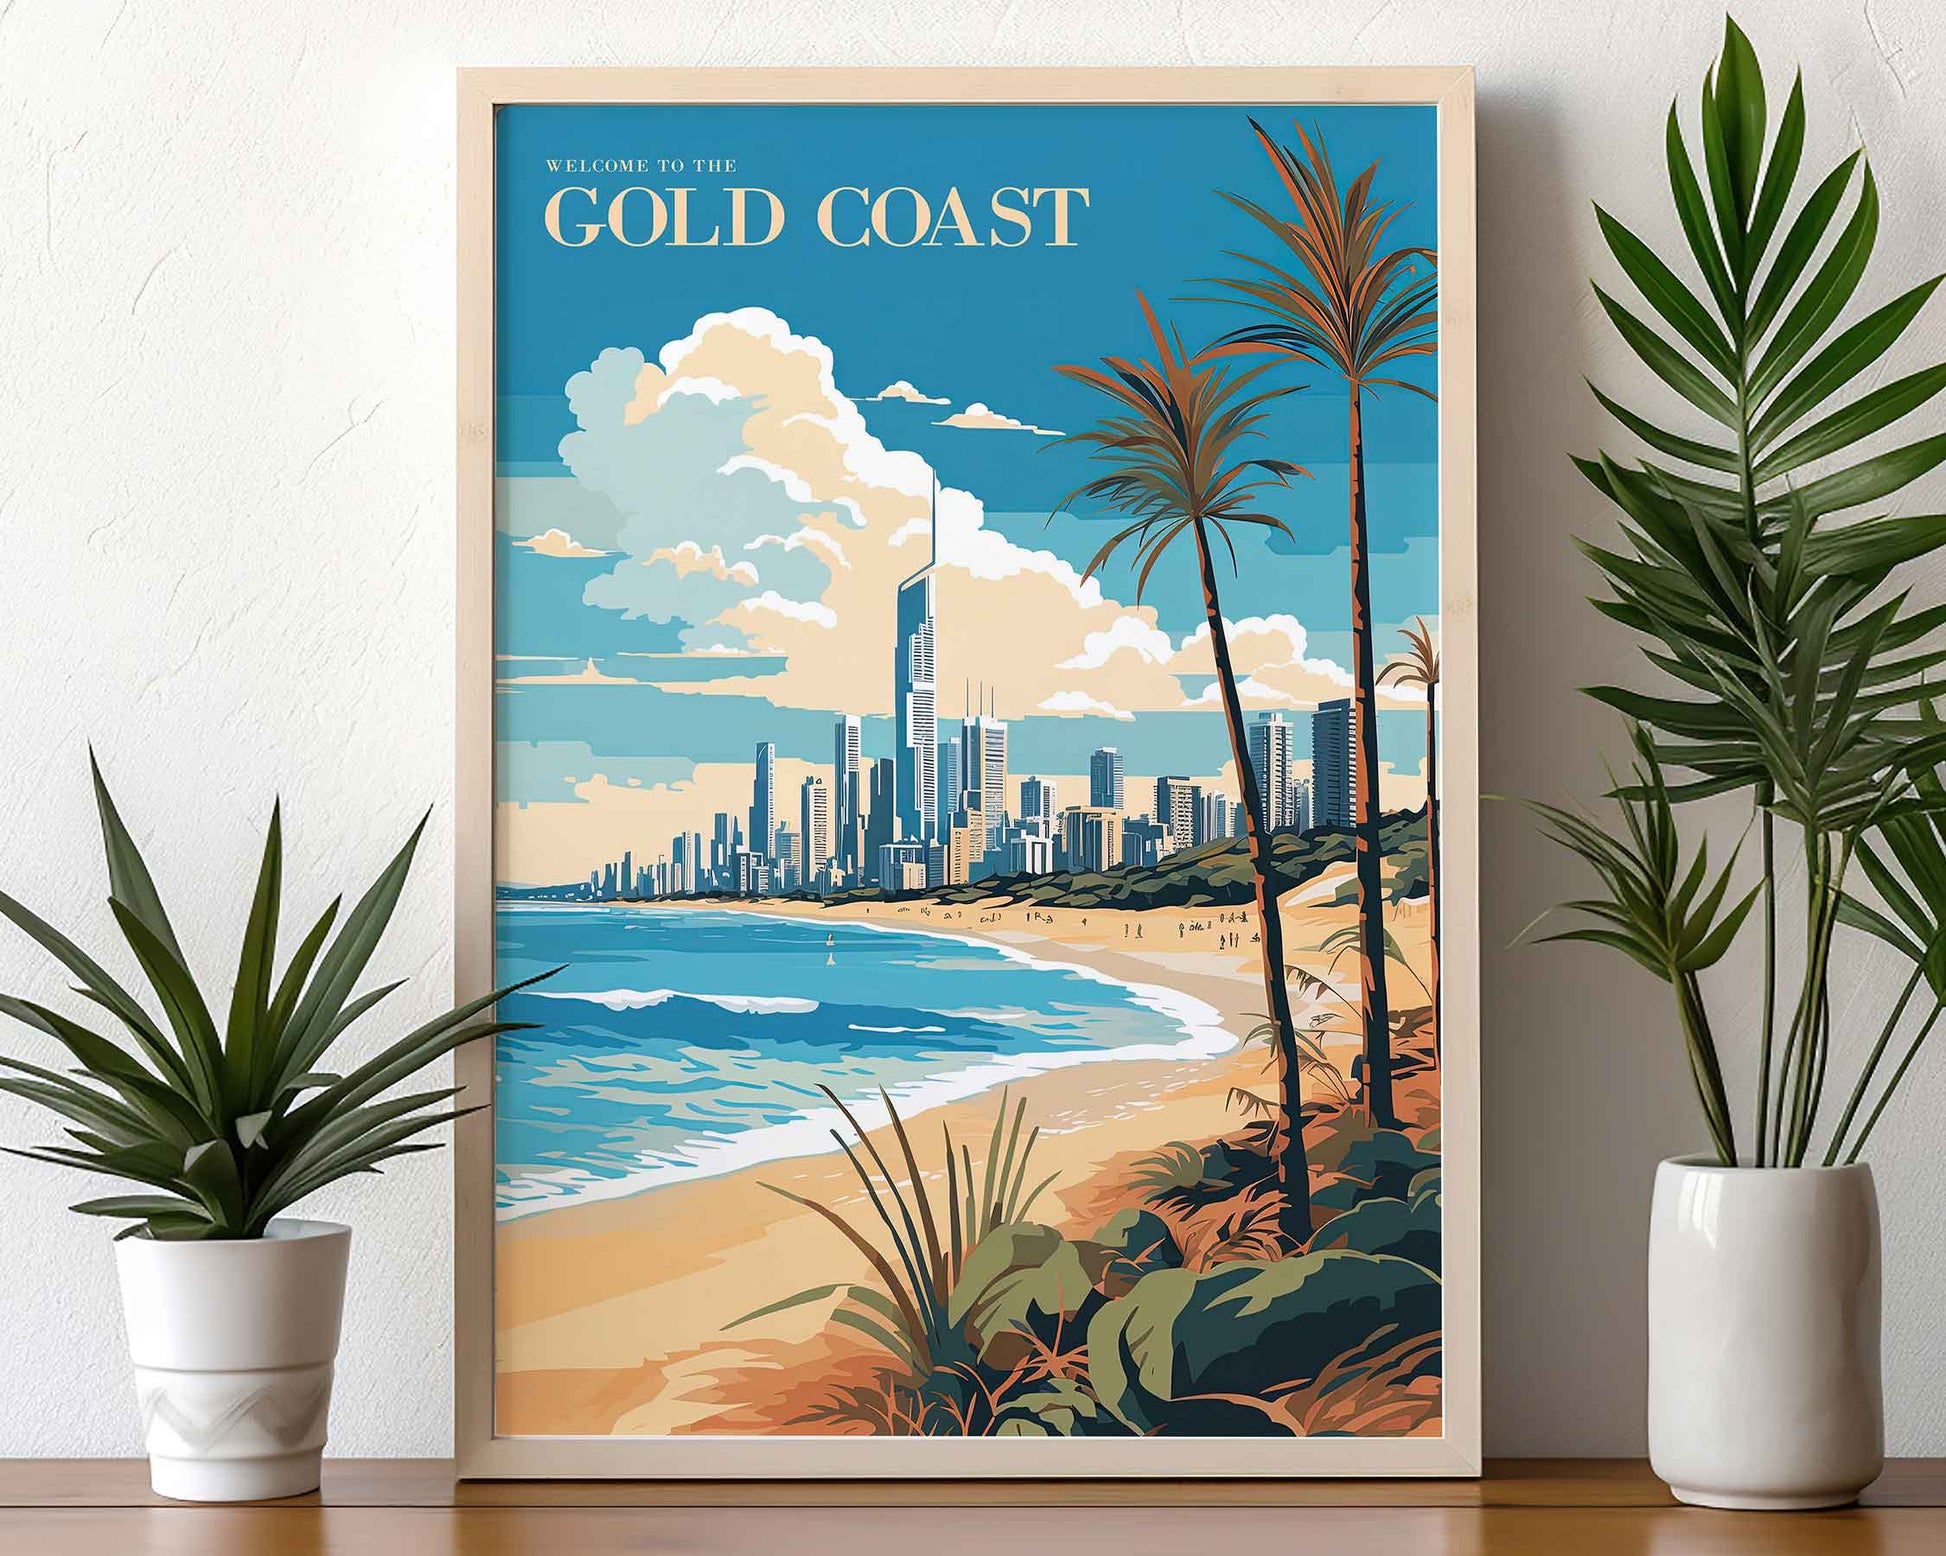 Framed Image of Gold Coast Australia Travel Illustration Poster Prints Wall Art